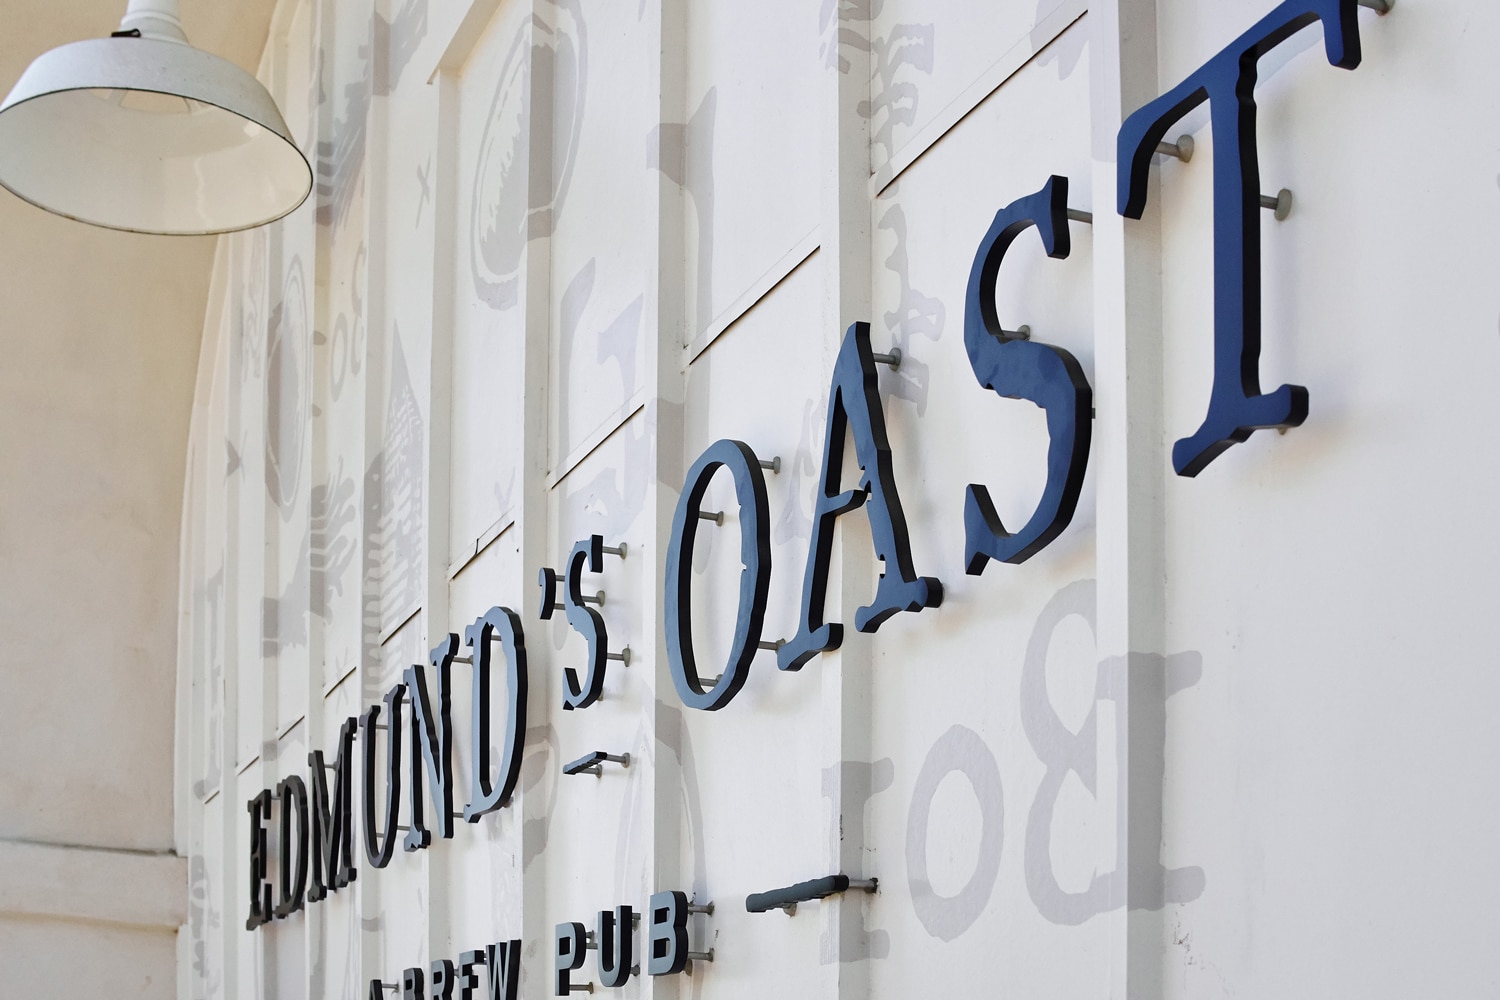 Edmunds Oast | SDCO Partners